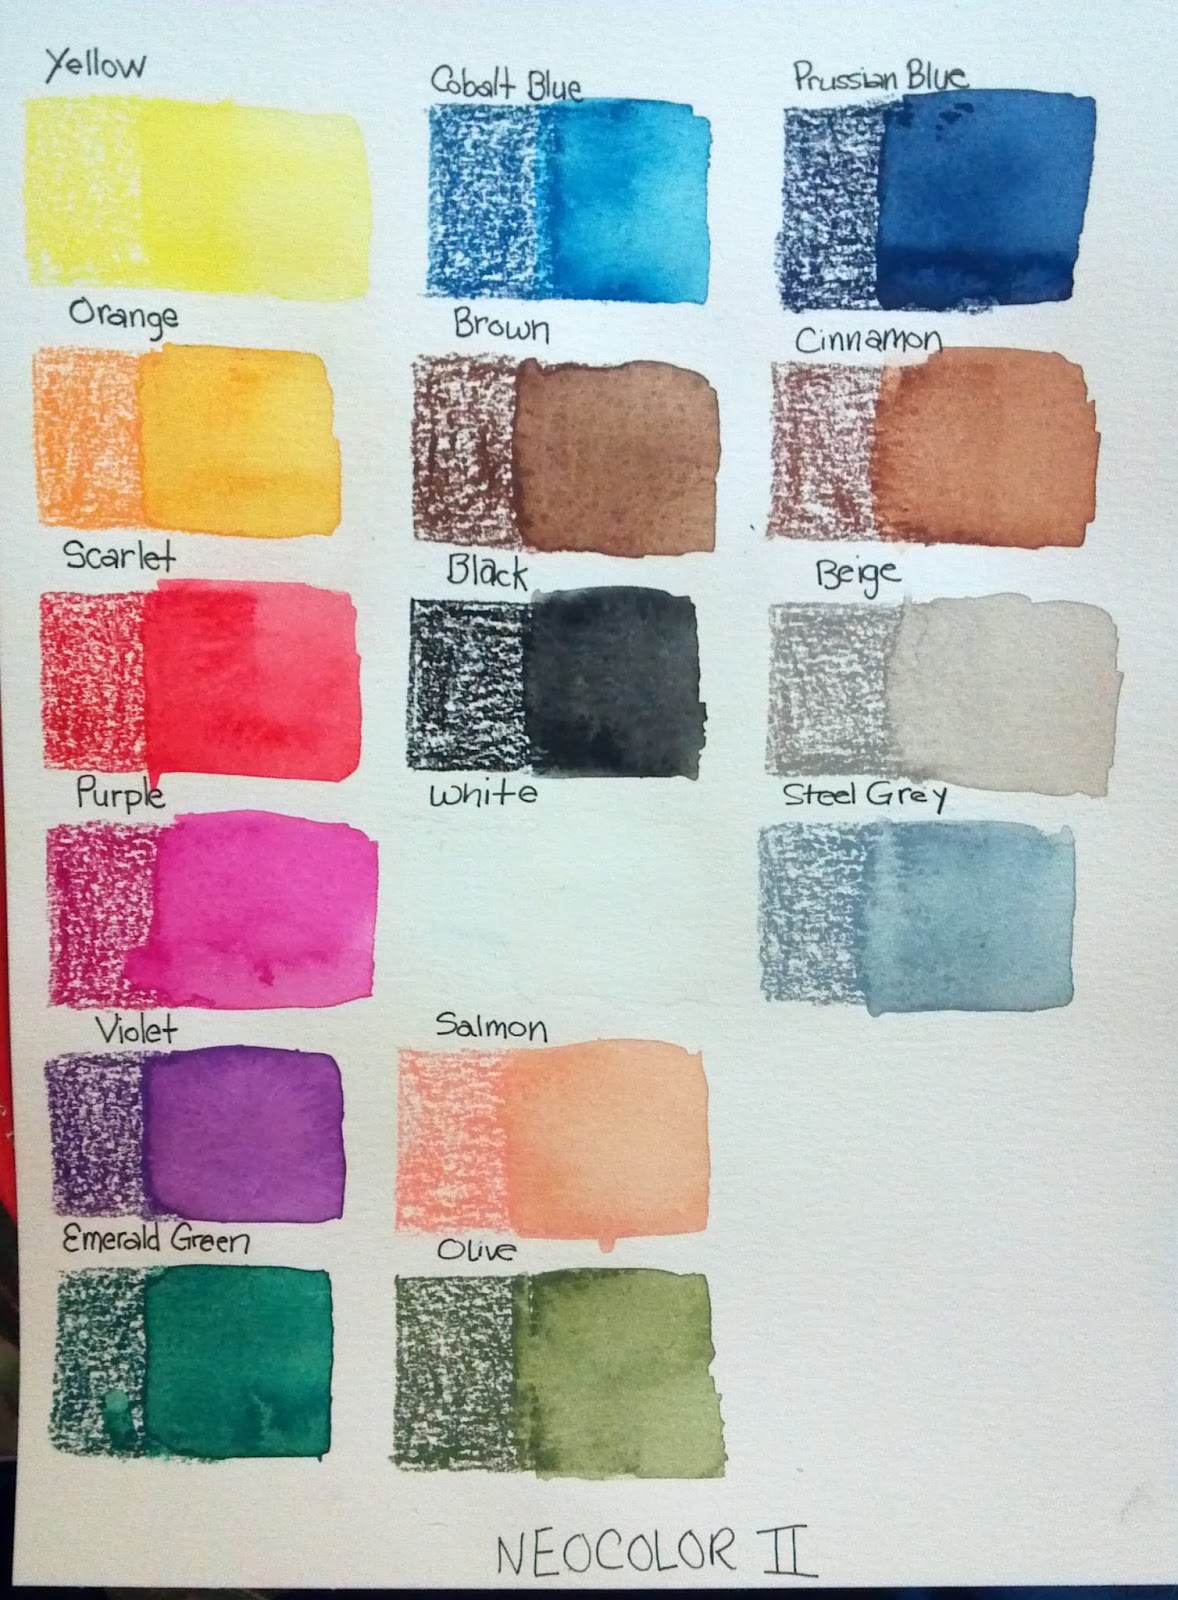 Watercolor Crayons: Caran D'ache Neocolor II